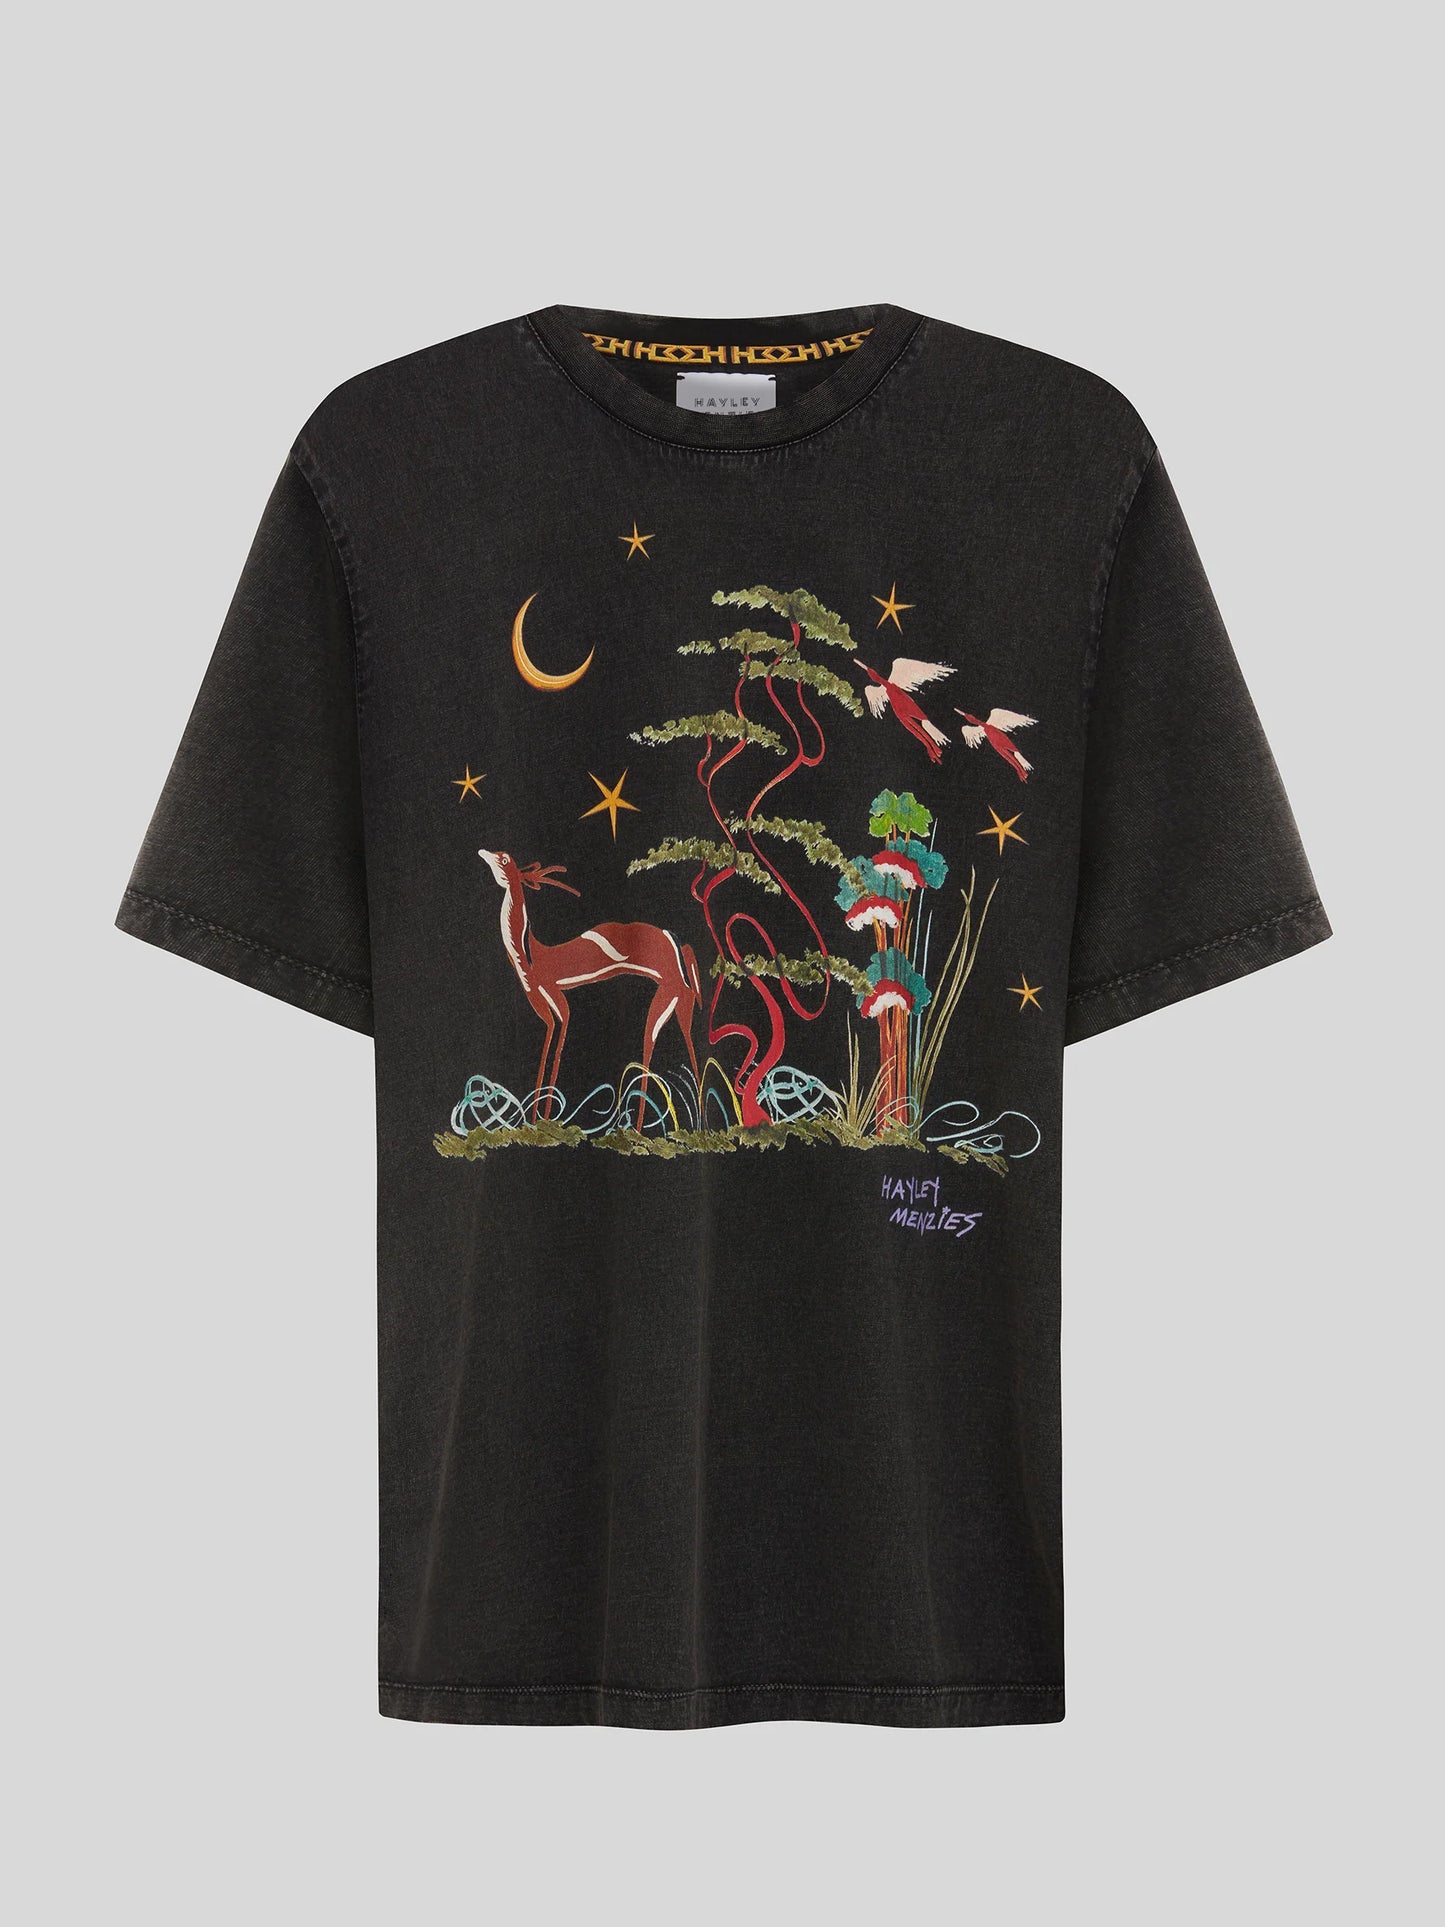 Utopia Black Cotton T-Shirt